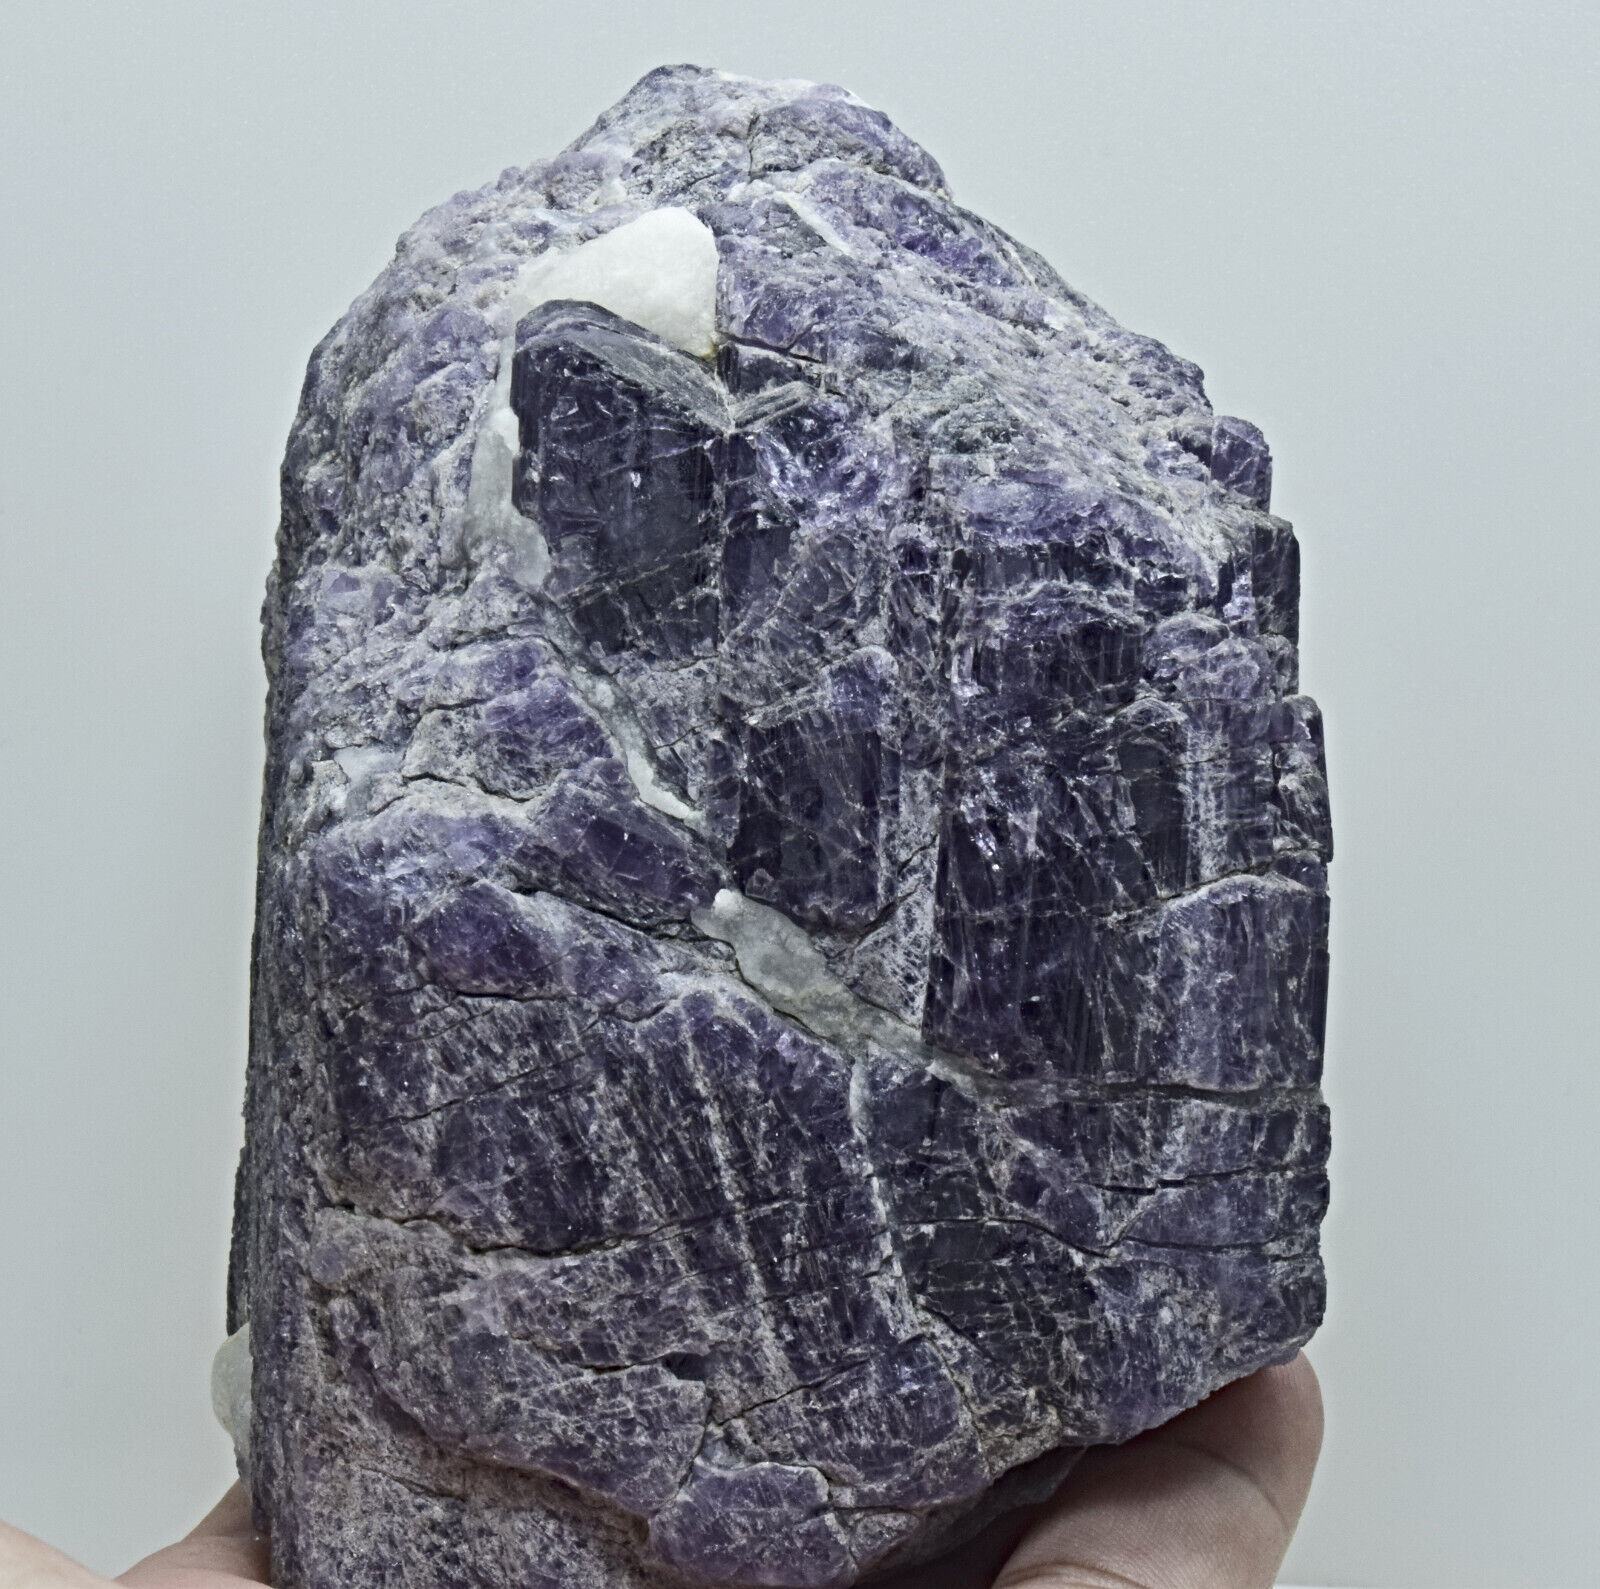 Huge Fluorescent Purple Scapolite Crystal From Badakhshan Afghanistan 781 Gram